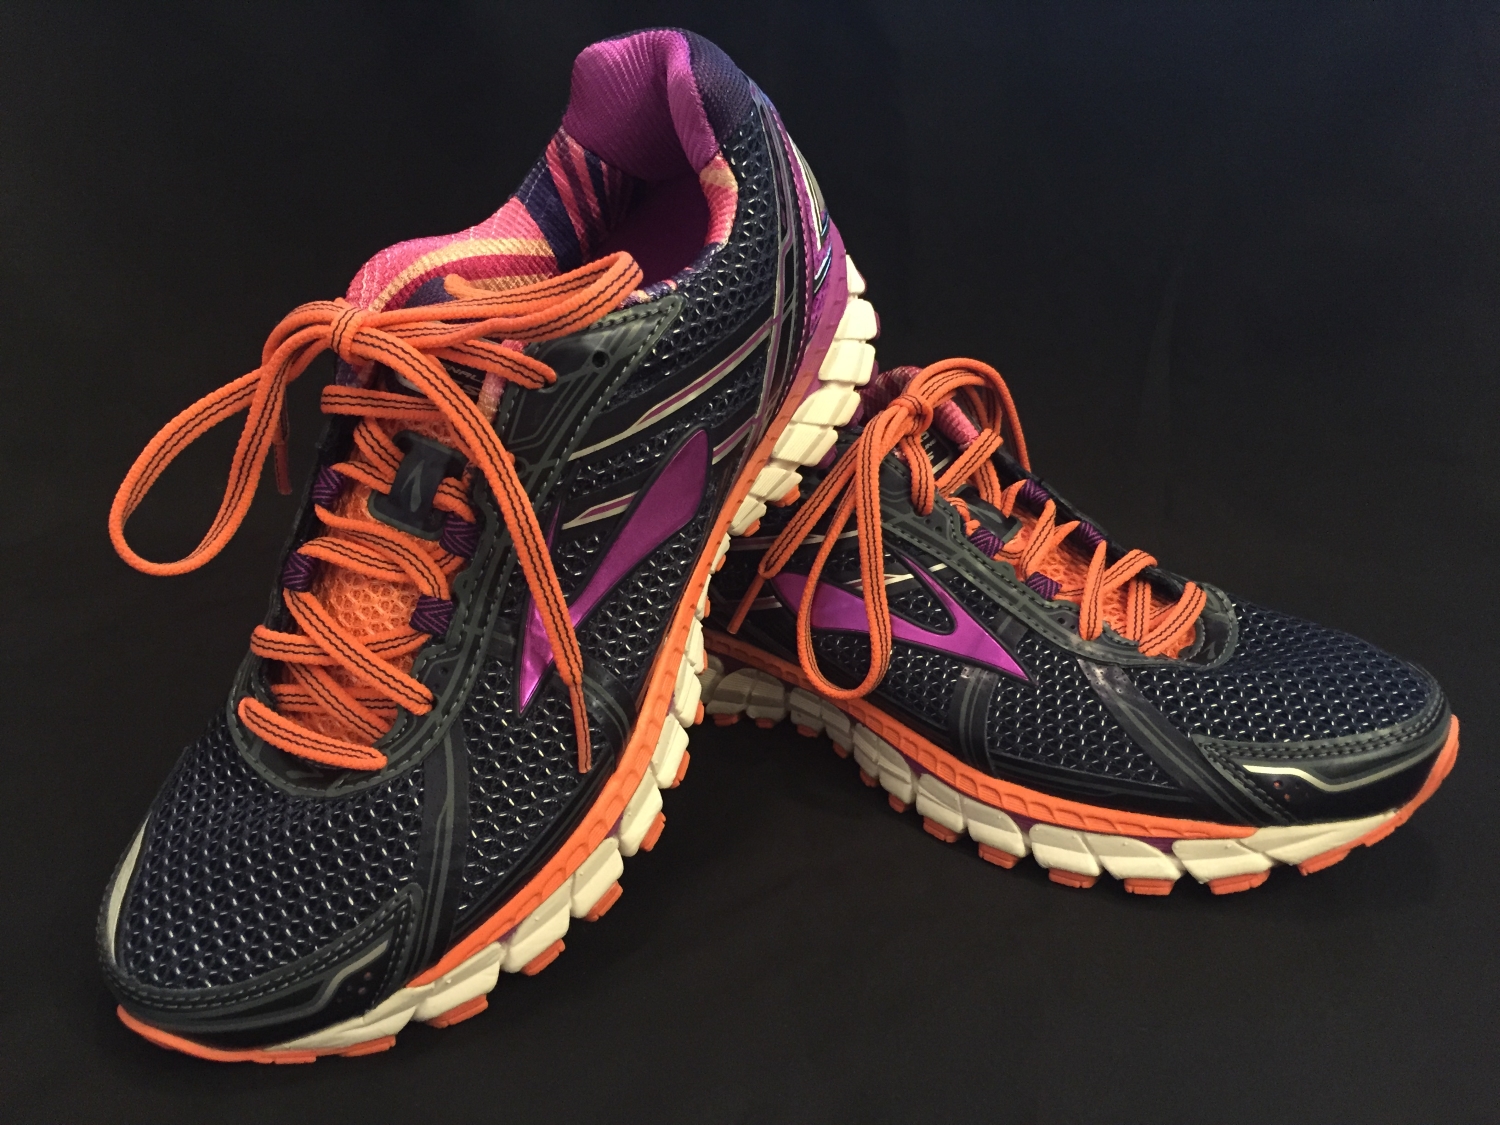 brooks women's adrenaline gts 15 support running shoes